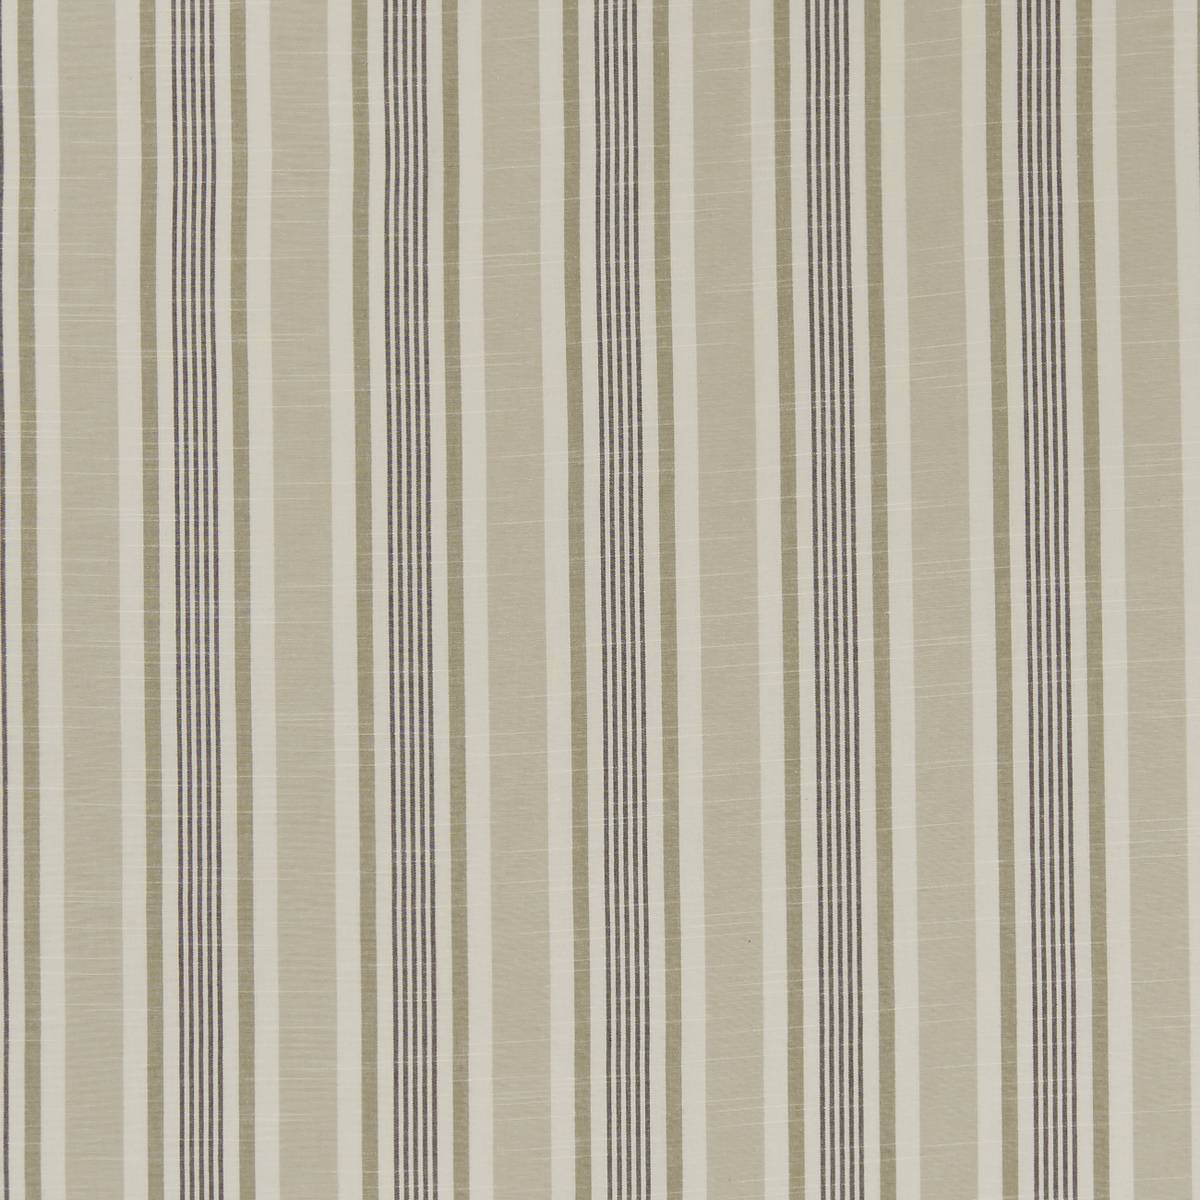 Mappleton Charcoal Fabric by Studio G